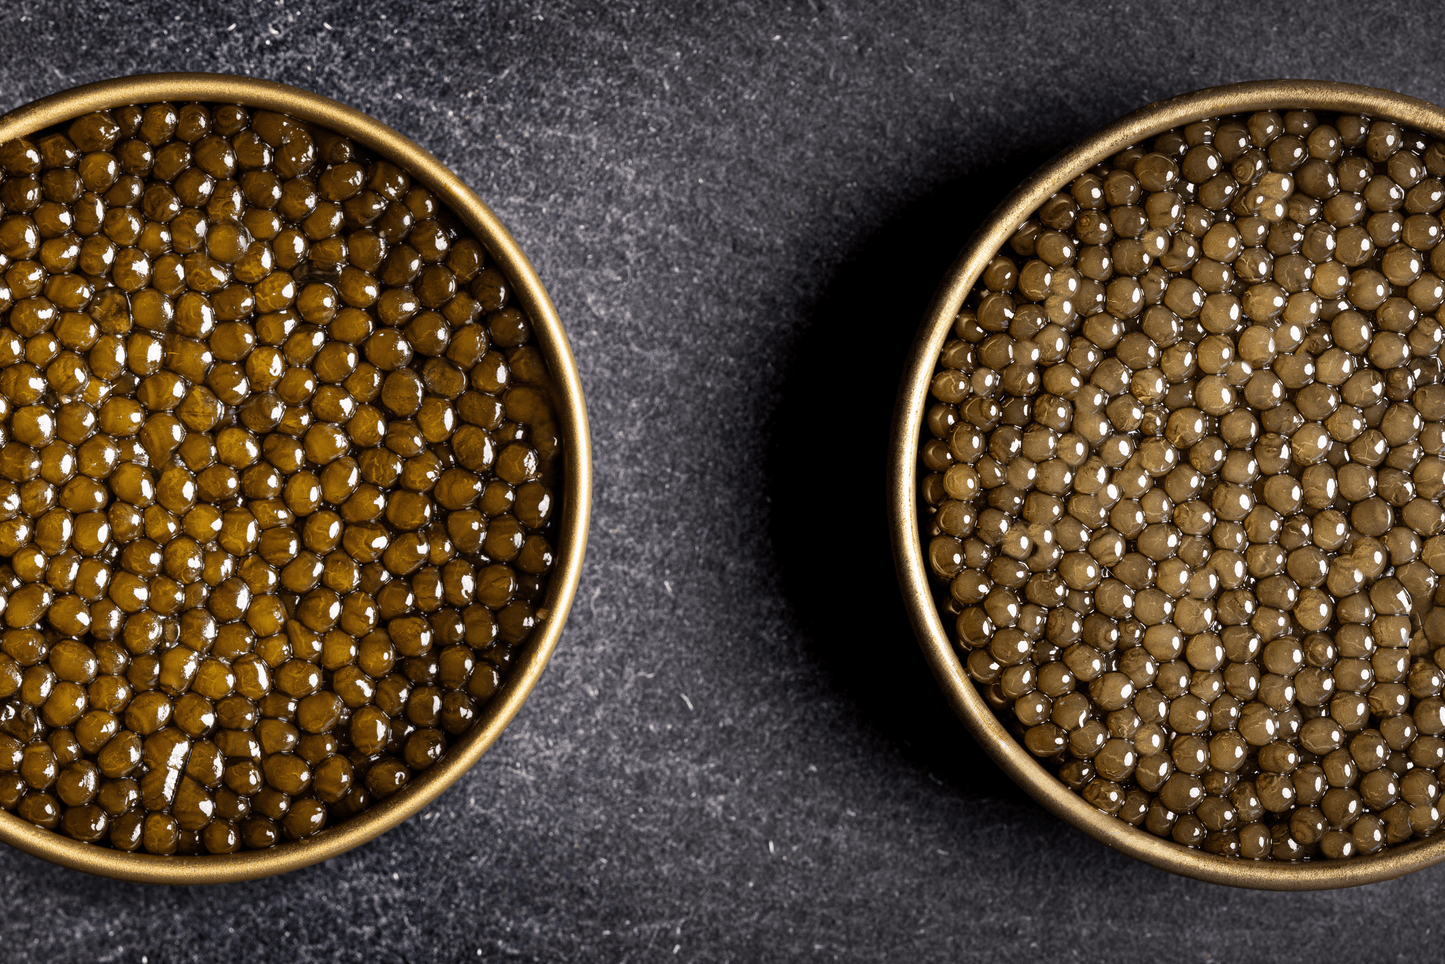 Doyy Caviar Duo | Caviar Royale & Beluga Royale - Doyy Caviar